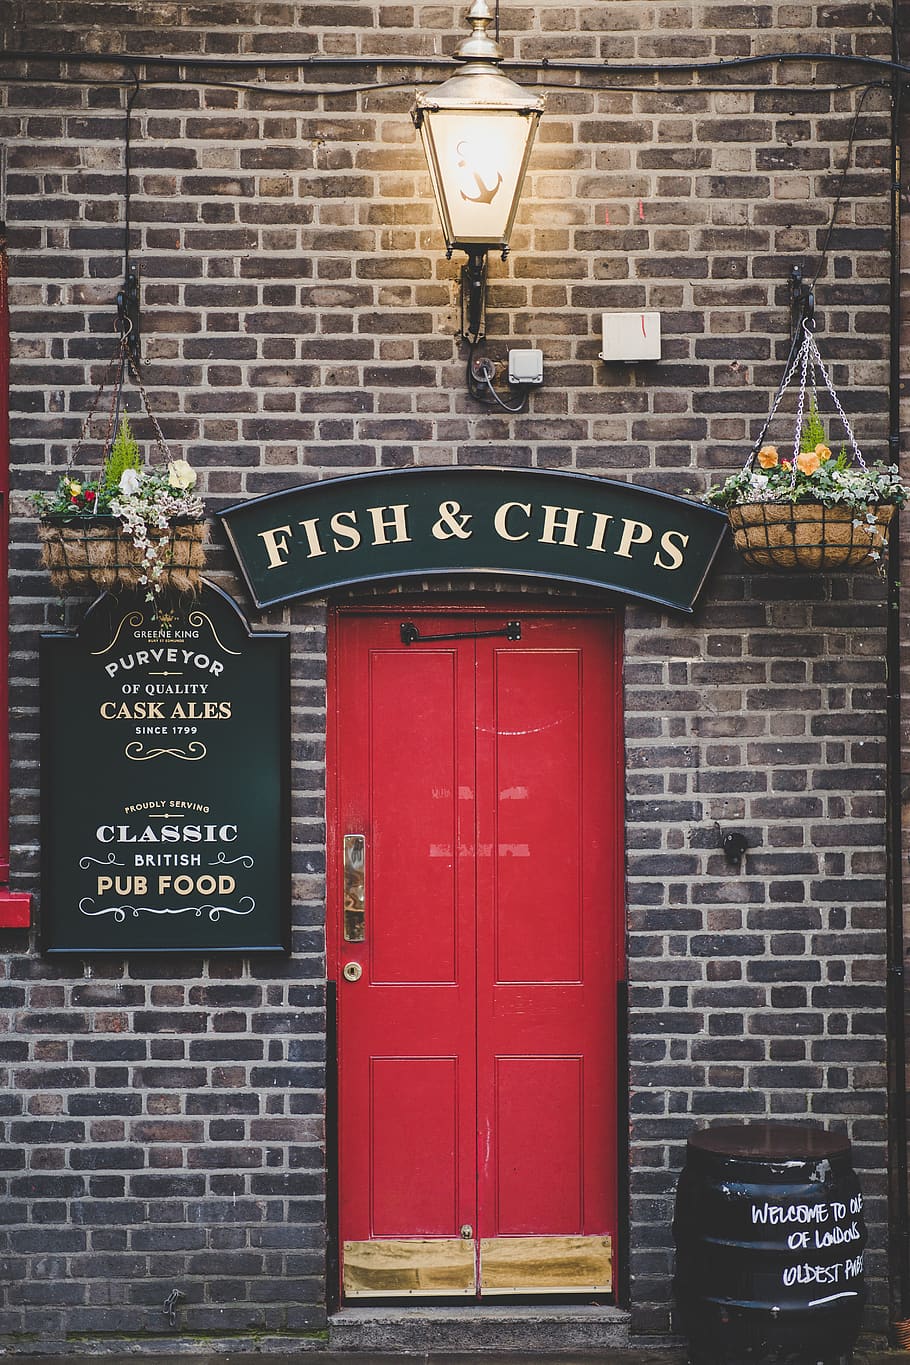 Fish & Chips signage over red door, brick, london, united kingdom